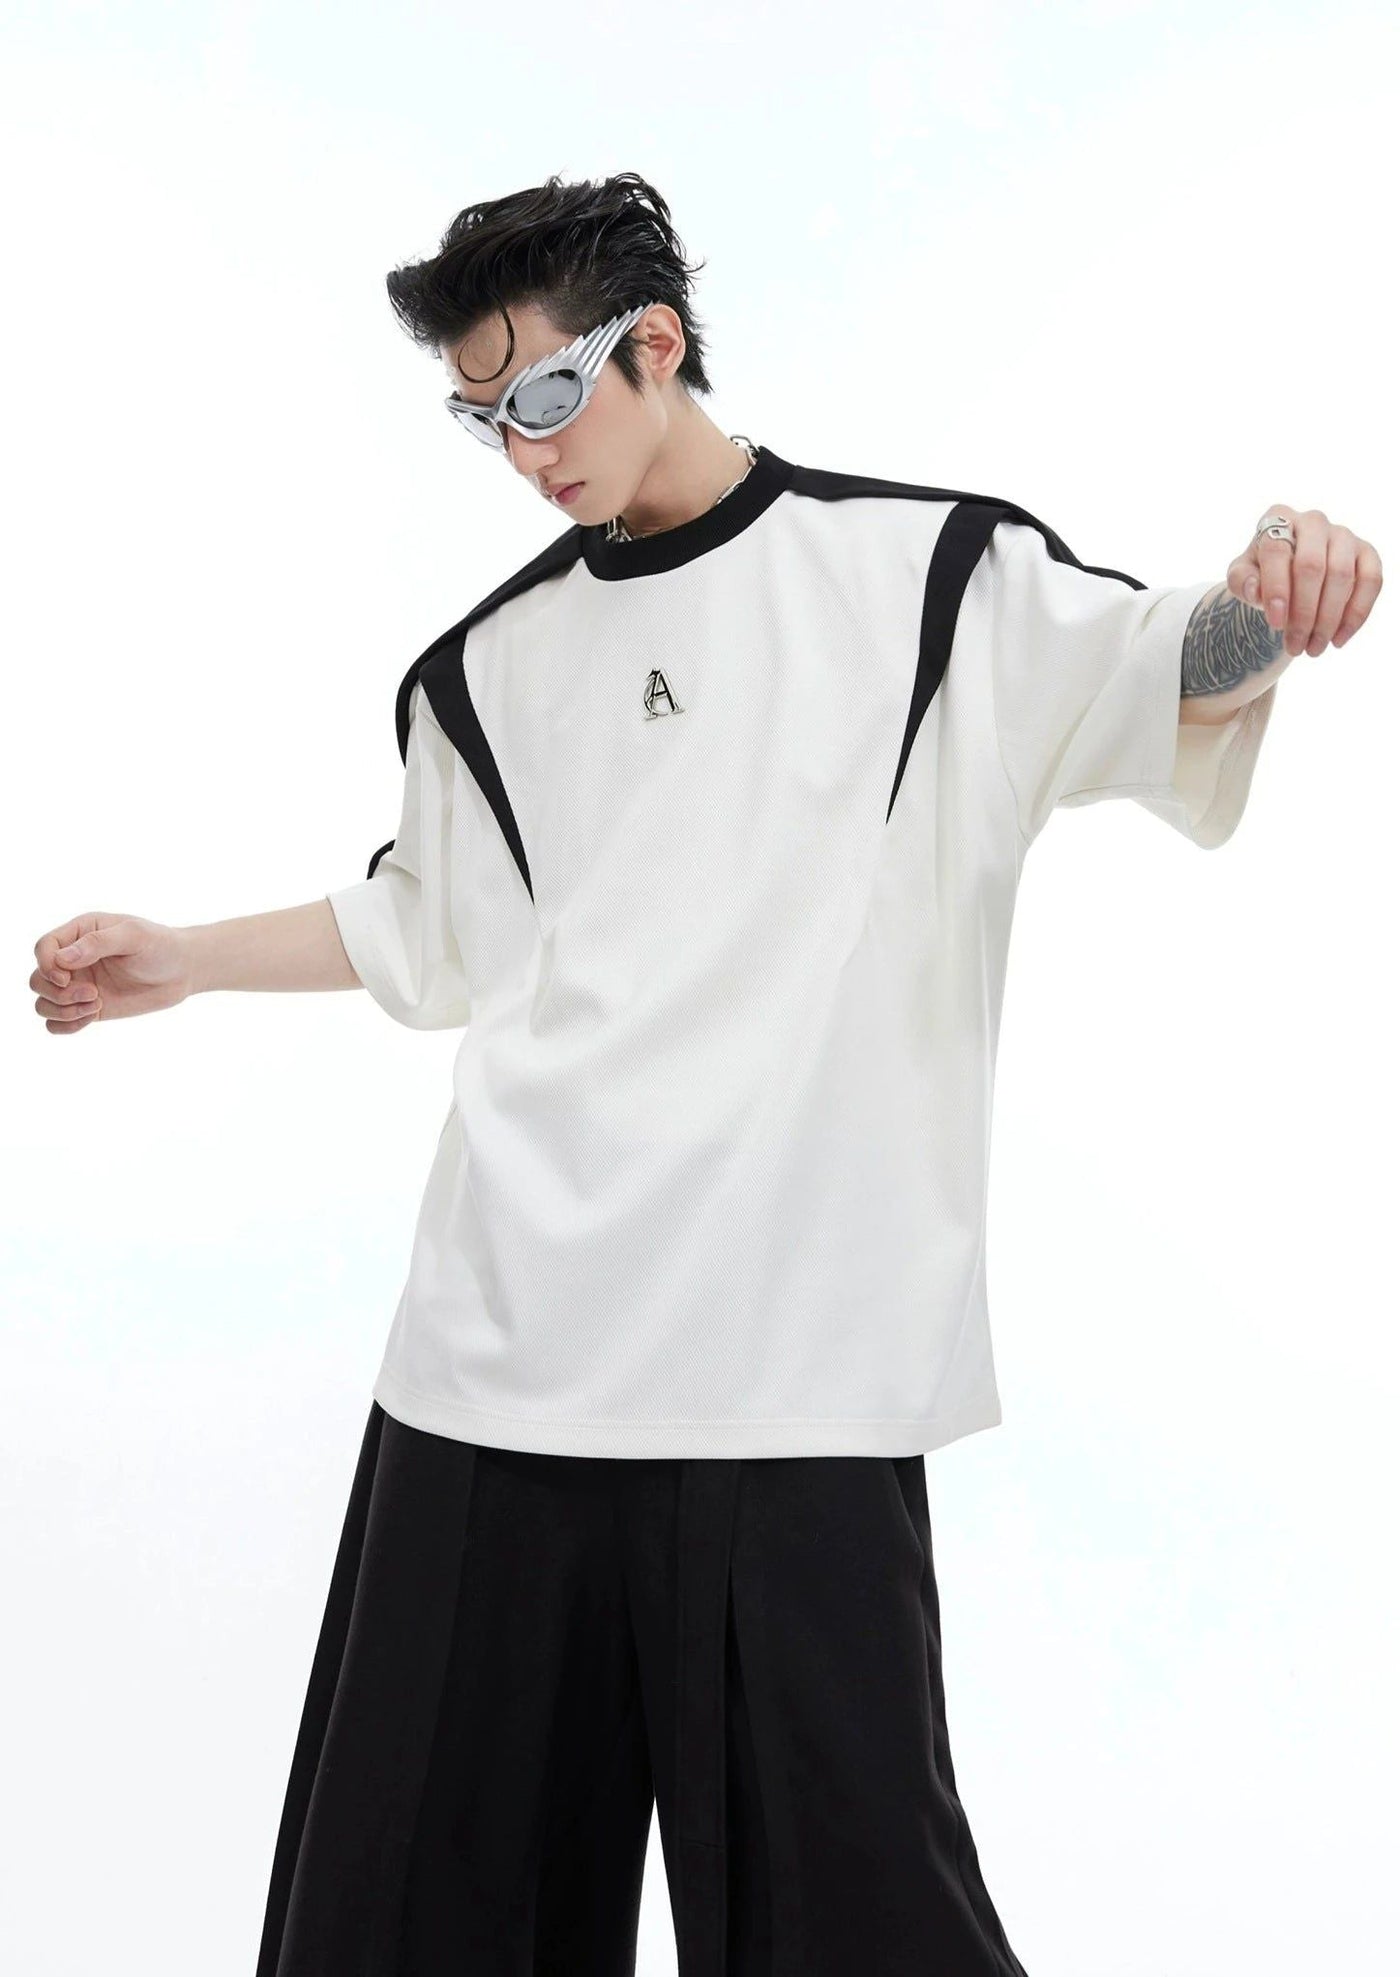 Lettered Accent Contrast T-Shirt Korean Street Fashion T-Shirt By Argue Culture Shop Online at OH Vault